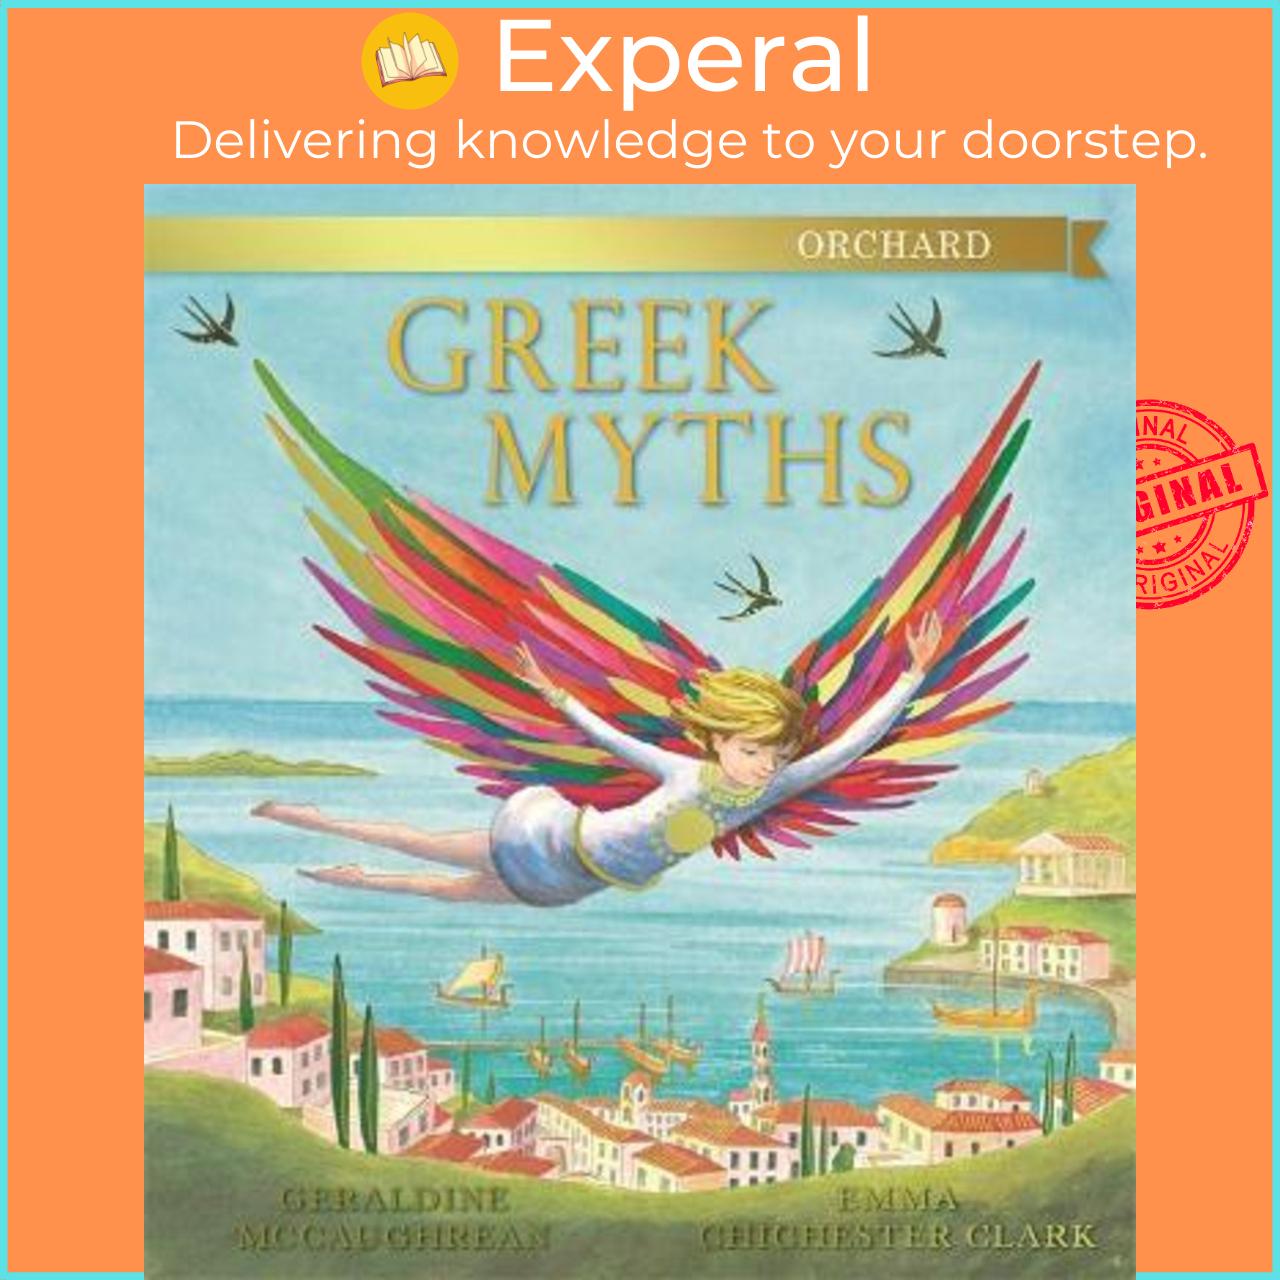 Sách - Orchard Greek Myths by Geraldine Mccaughrean (UK edition, hardcover)